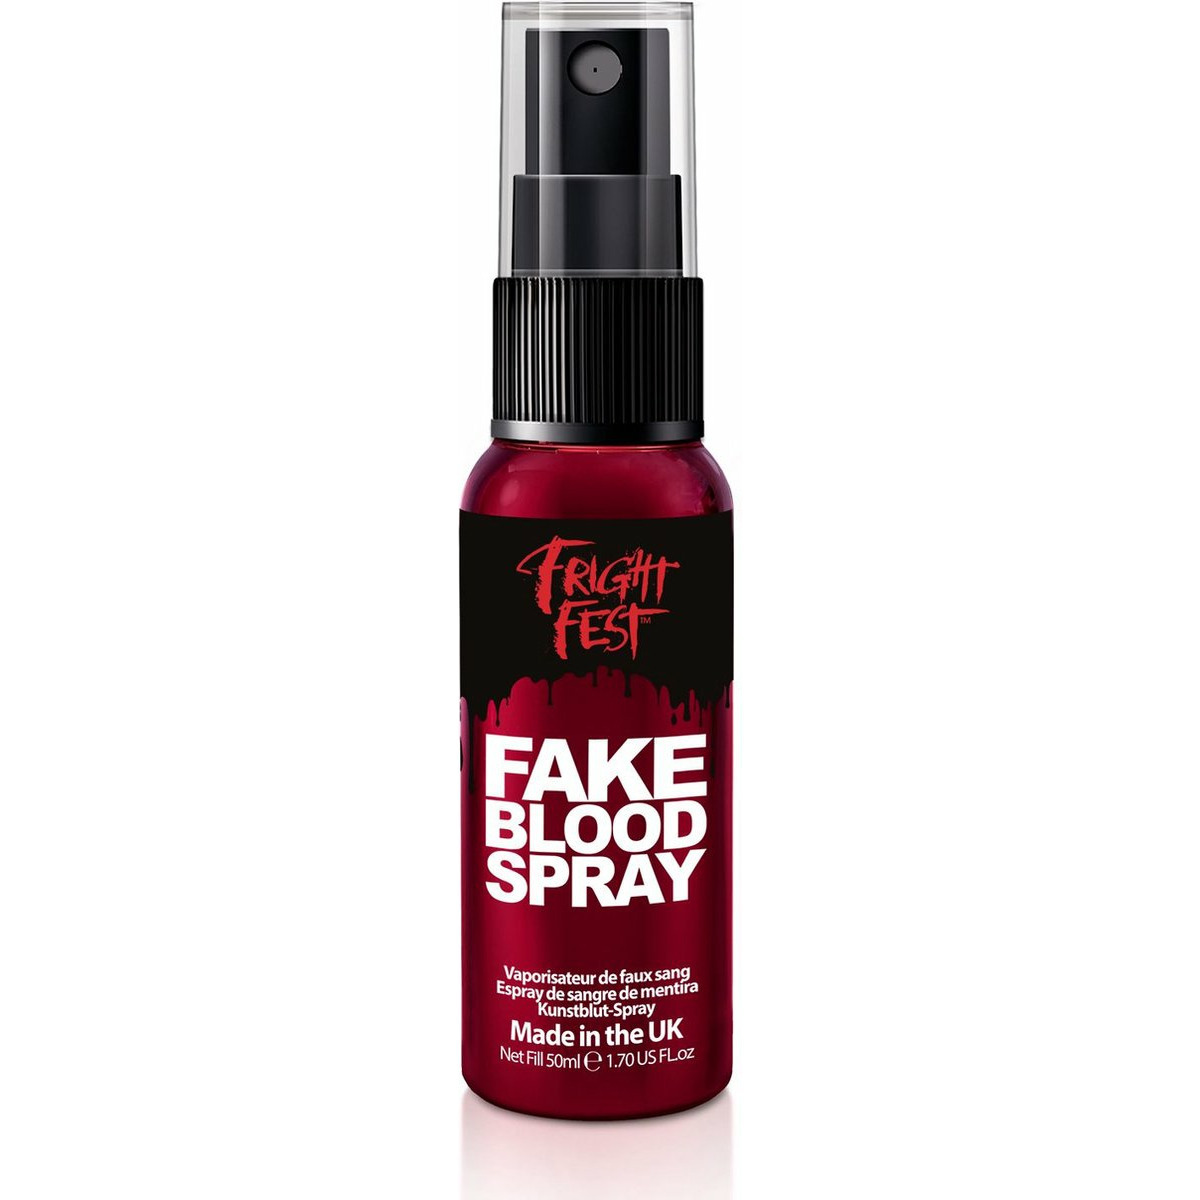 Nep bloed schmink-make up spray 50 ml